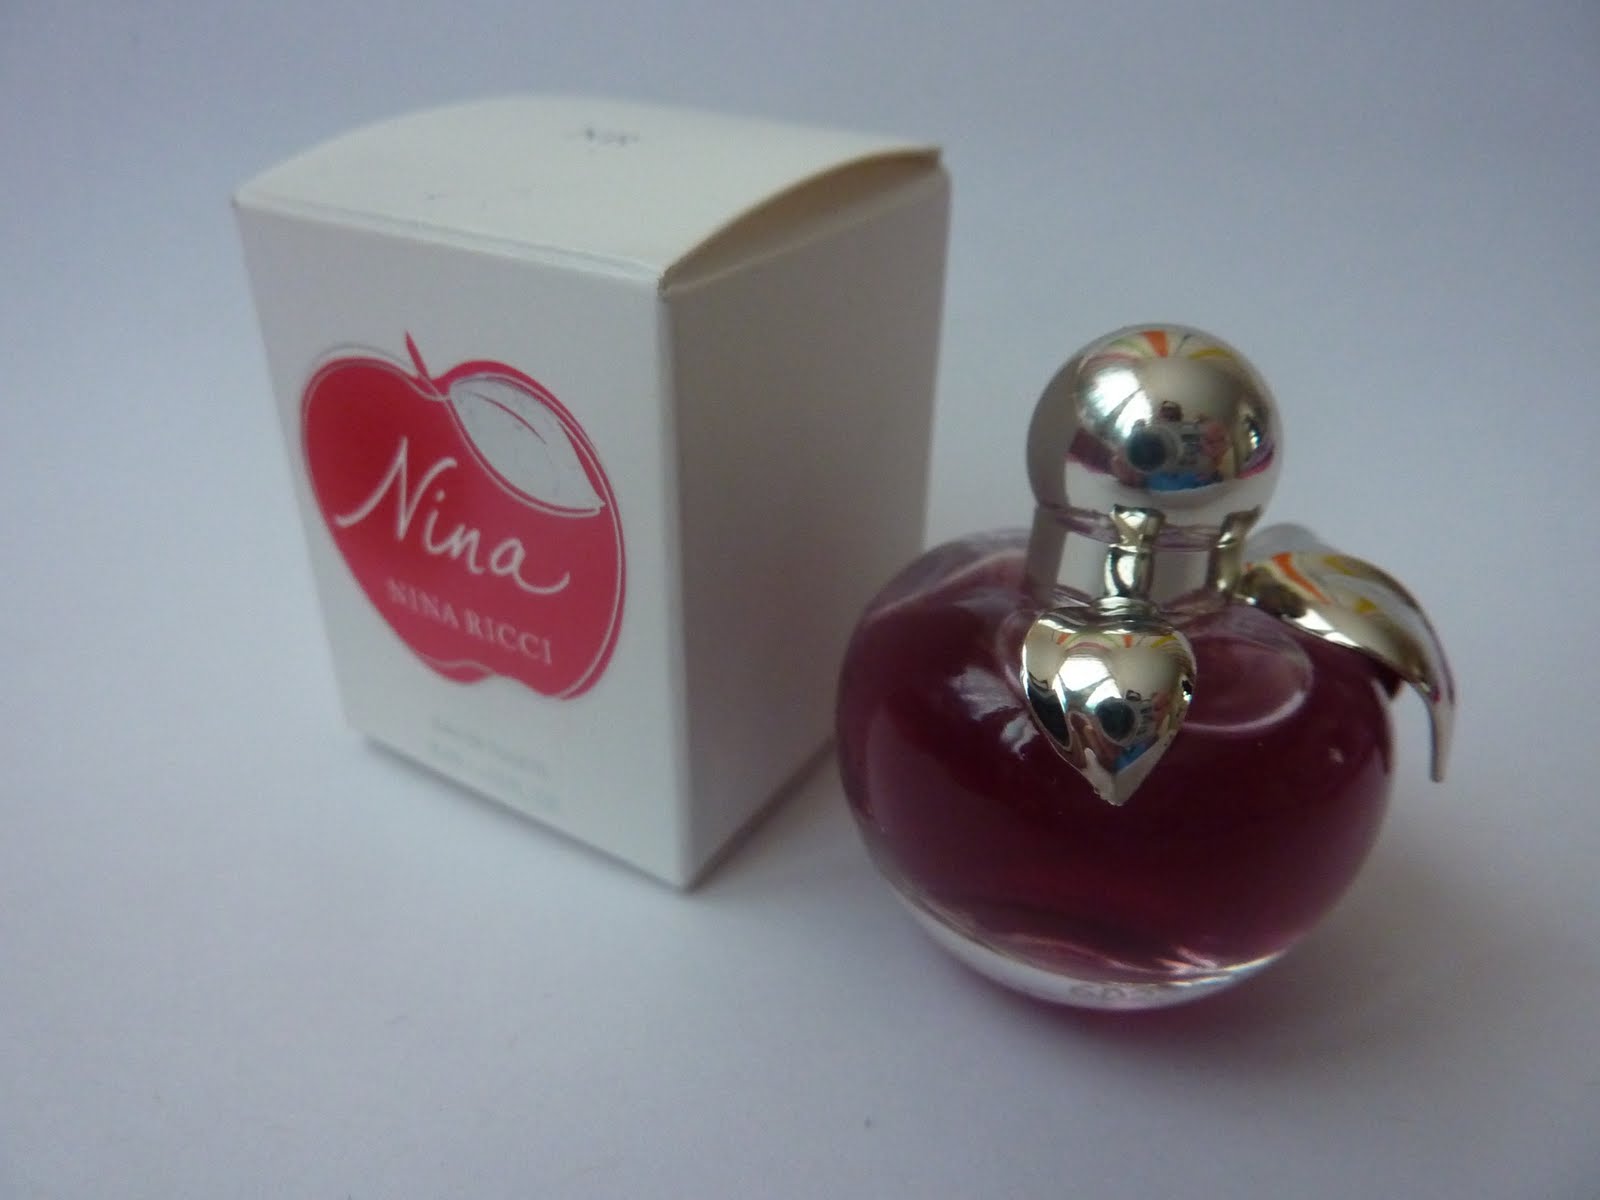 Winona Harrod BA Hons: Nina Ricci - Sample Perfume Packaging